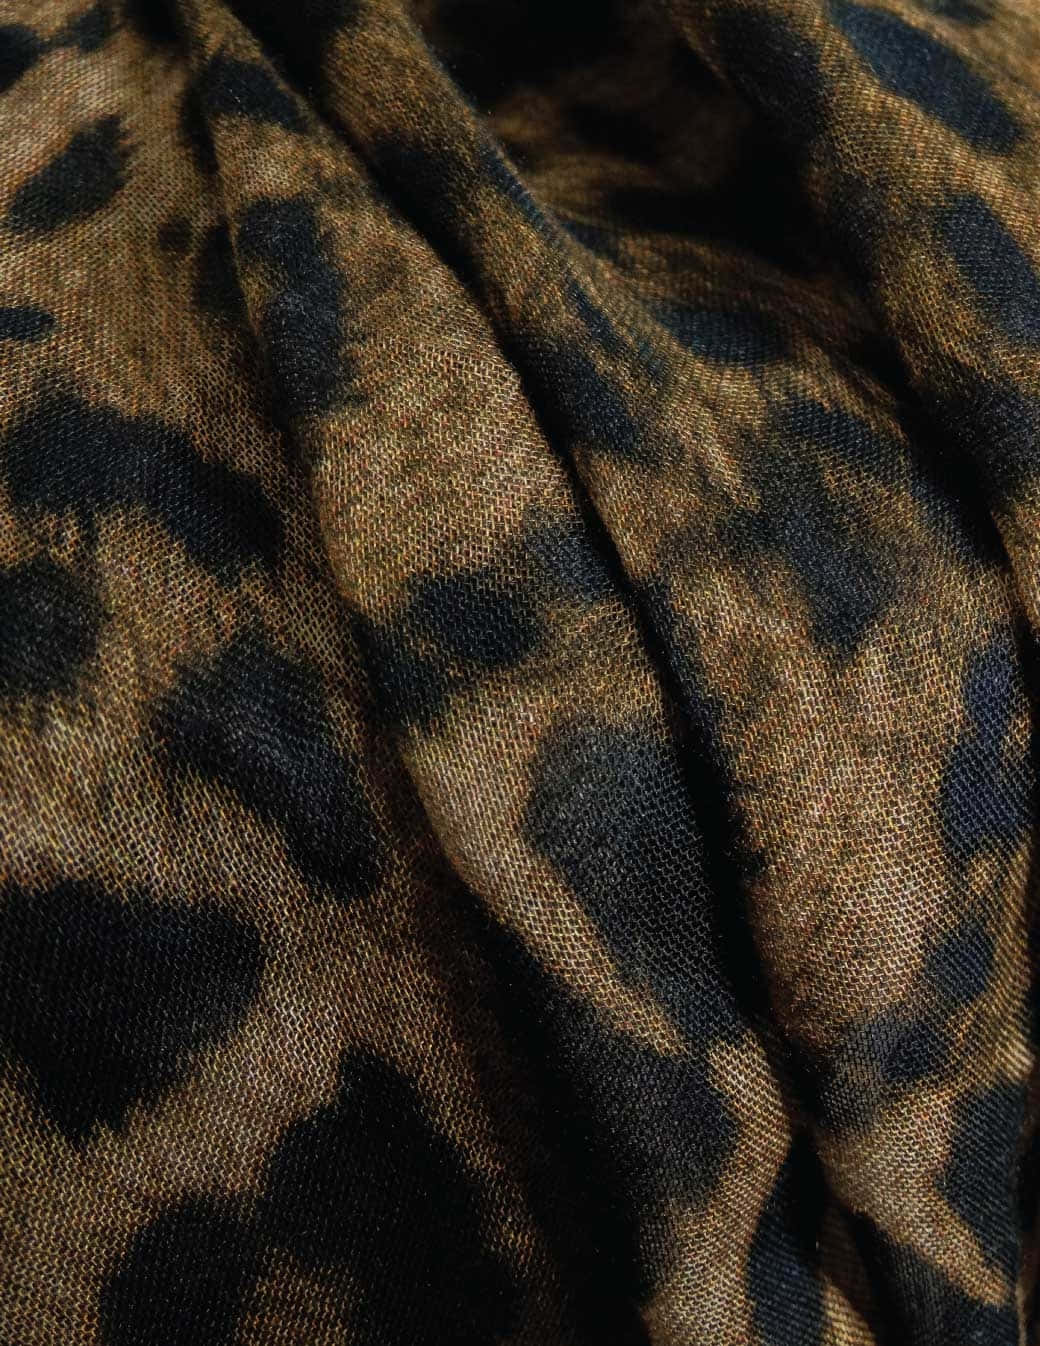 Black Leopard Print Fabric Texture Wallpaper